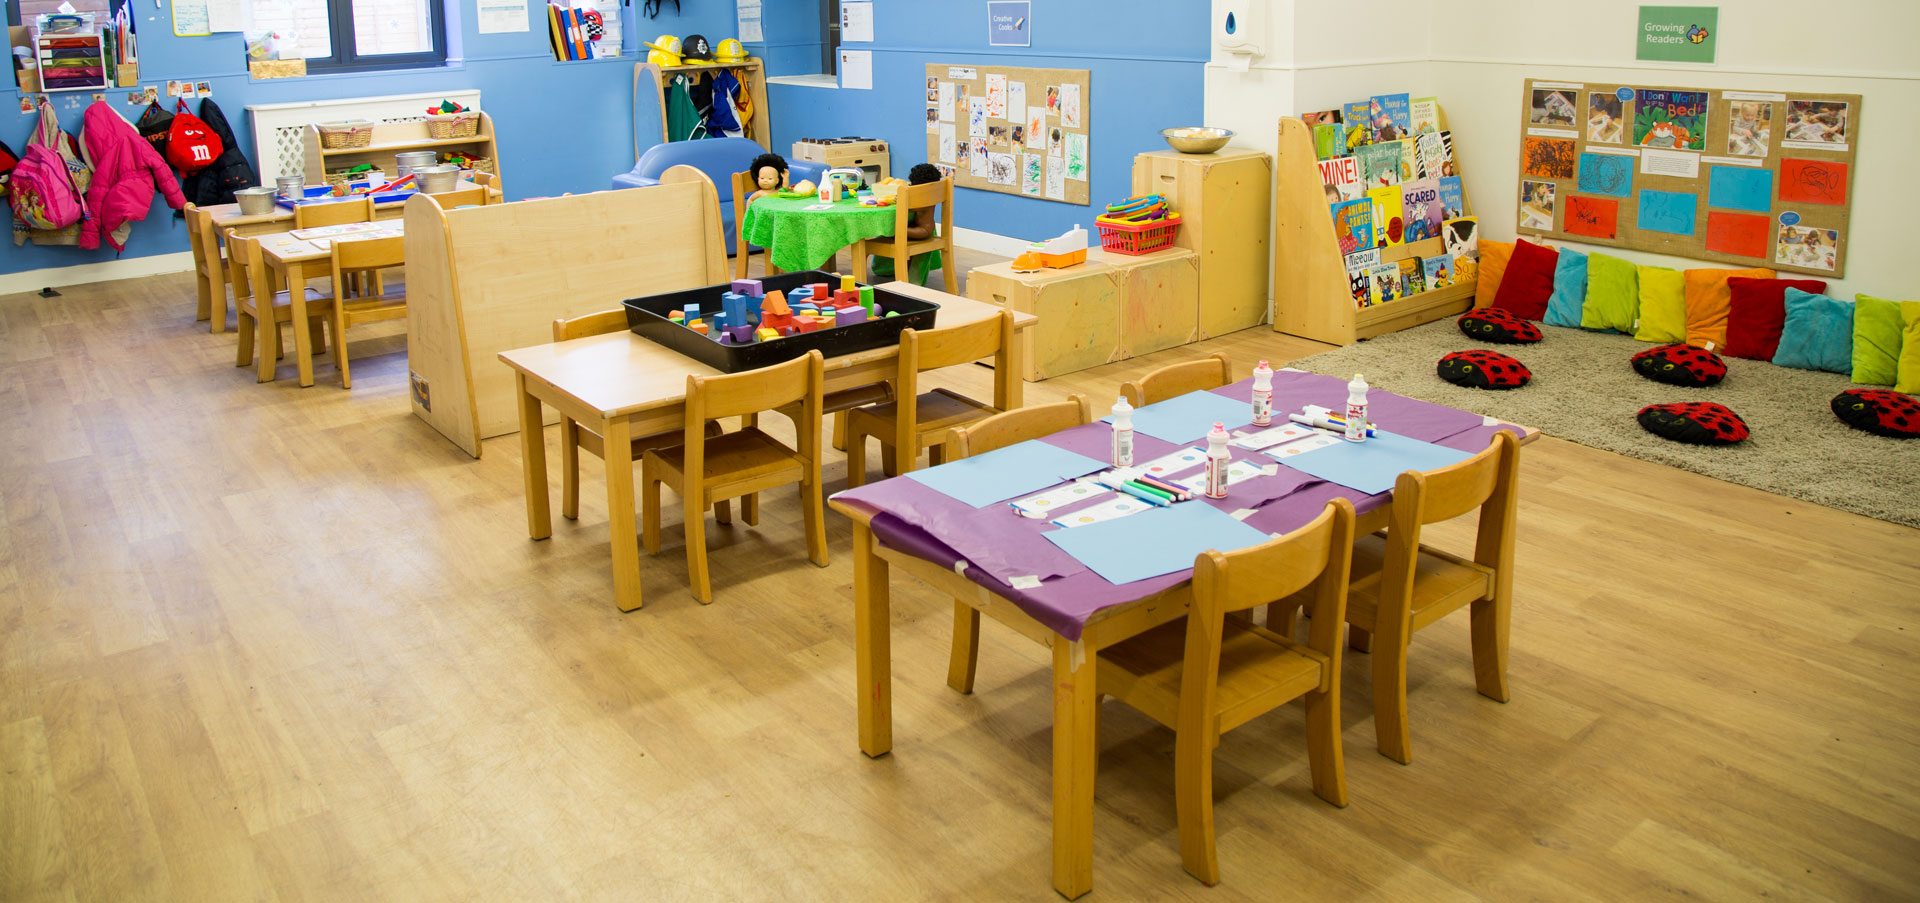 East Barnet Day Nursery and Preschool